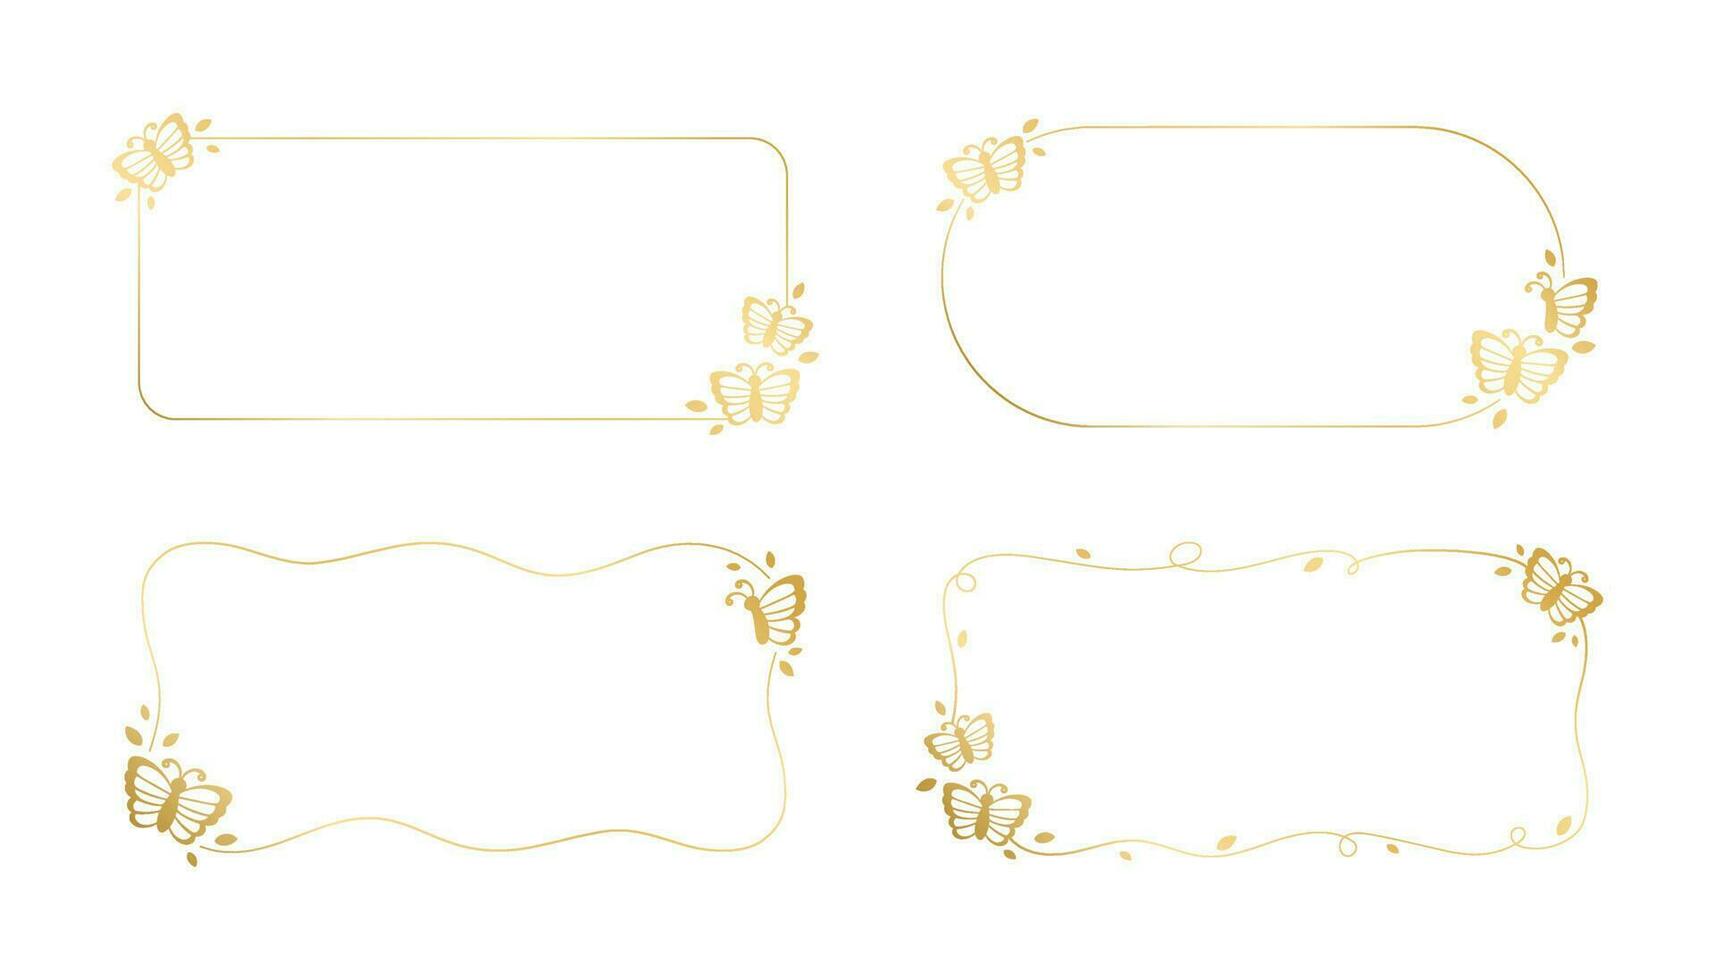 Gold frame with butterflies vector illustration. Abstract golden doodle border for spring summer elegant design elements